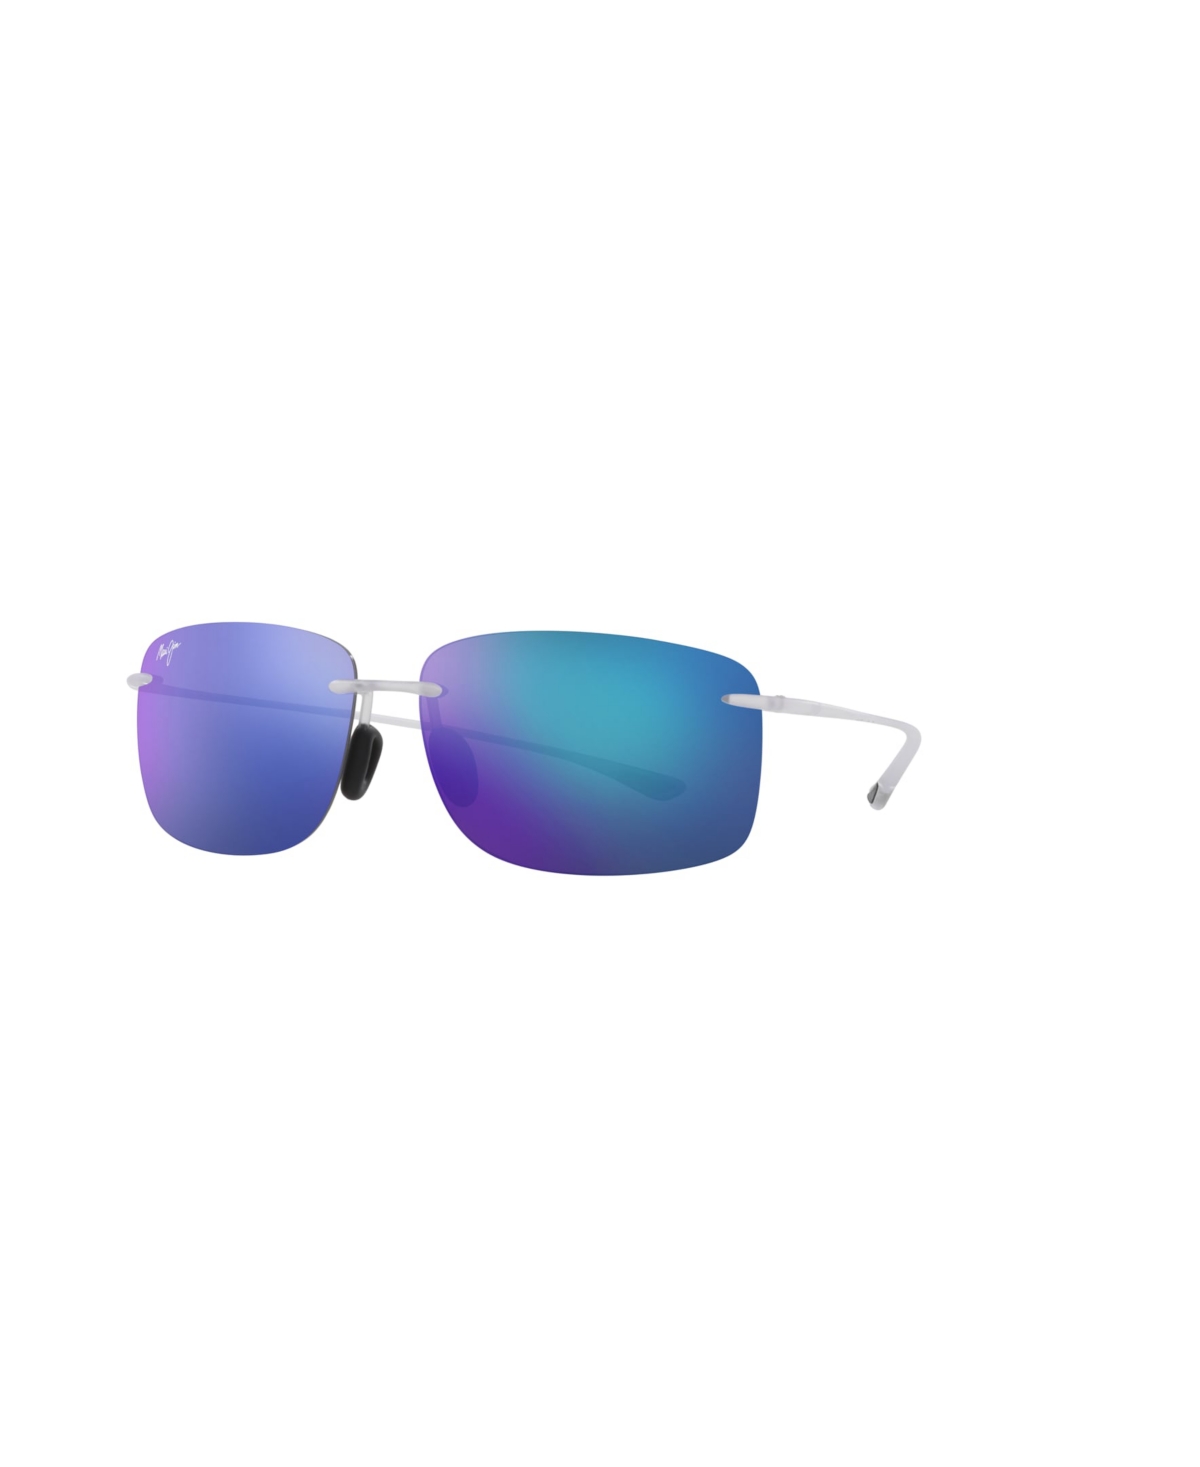 Maui Jim Unisex Sunglasses, B443-05cm Mj000643 In Metallic